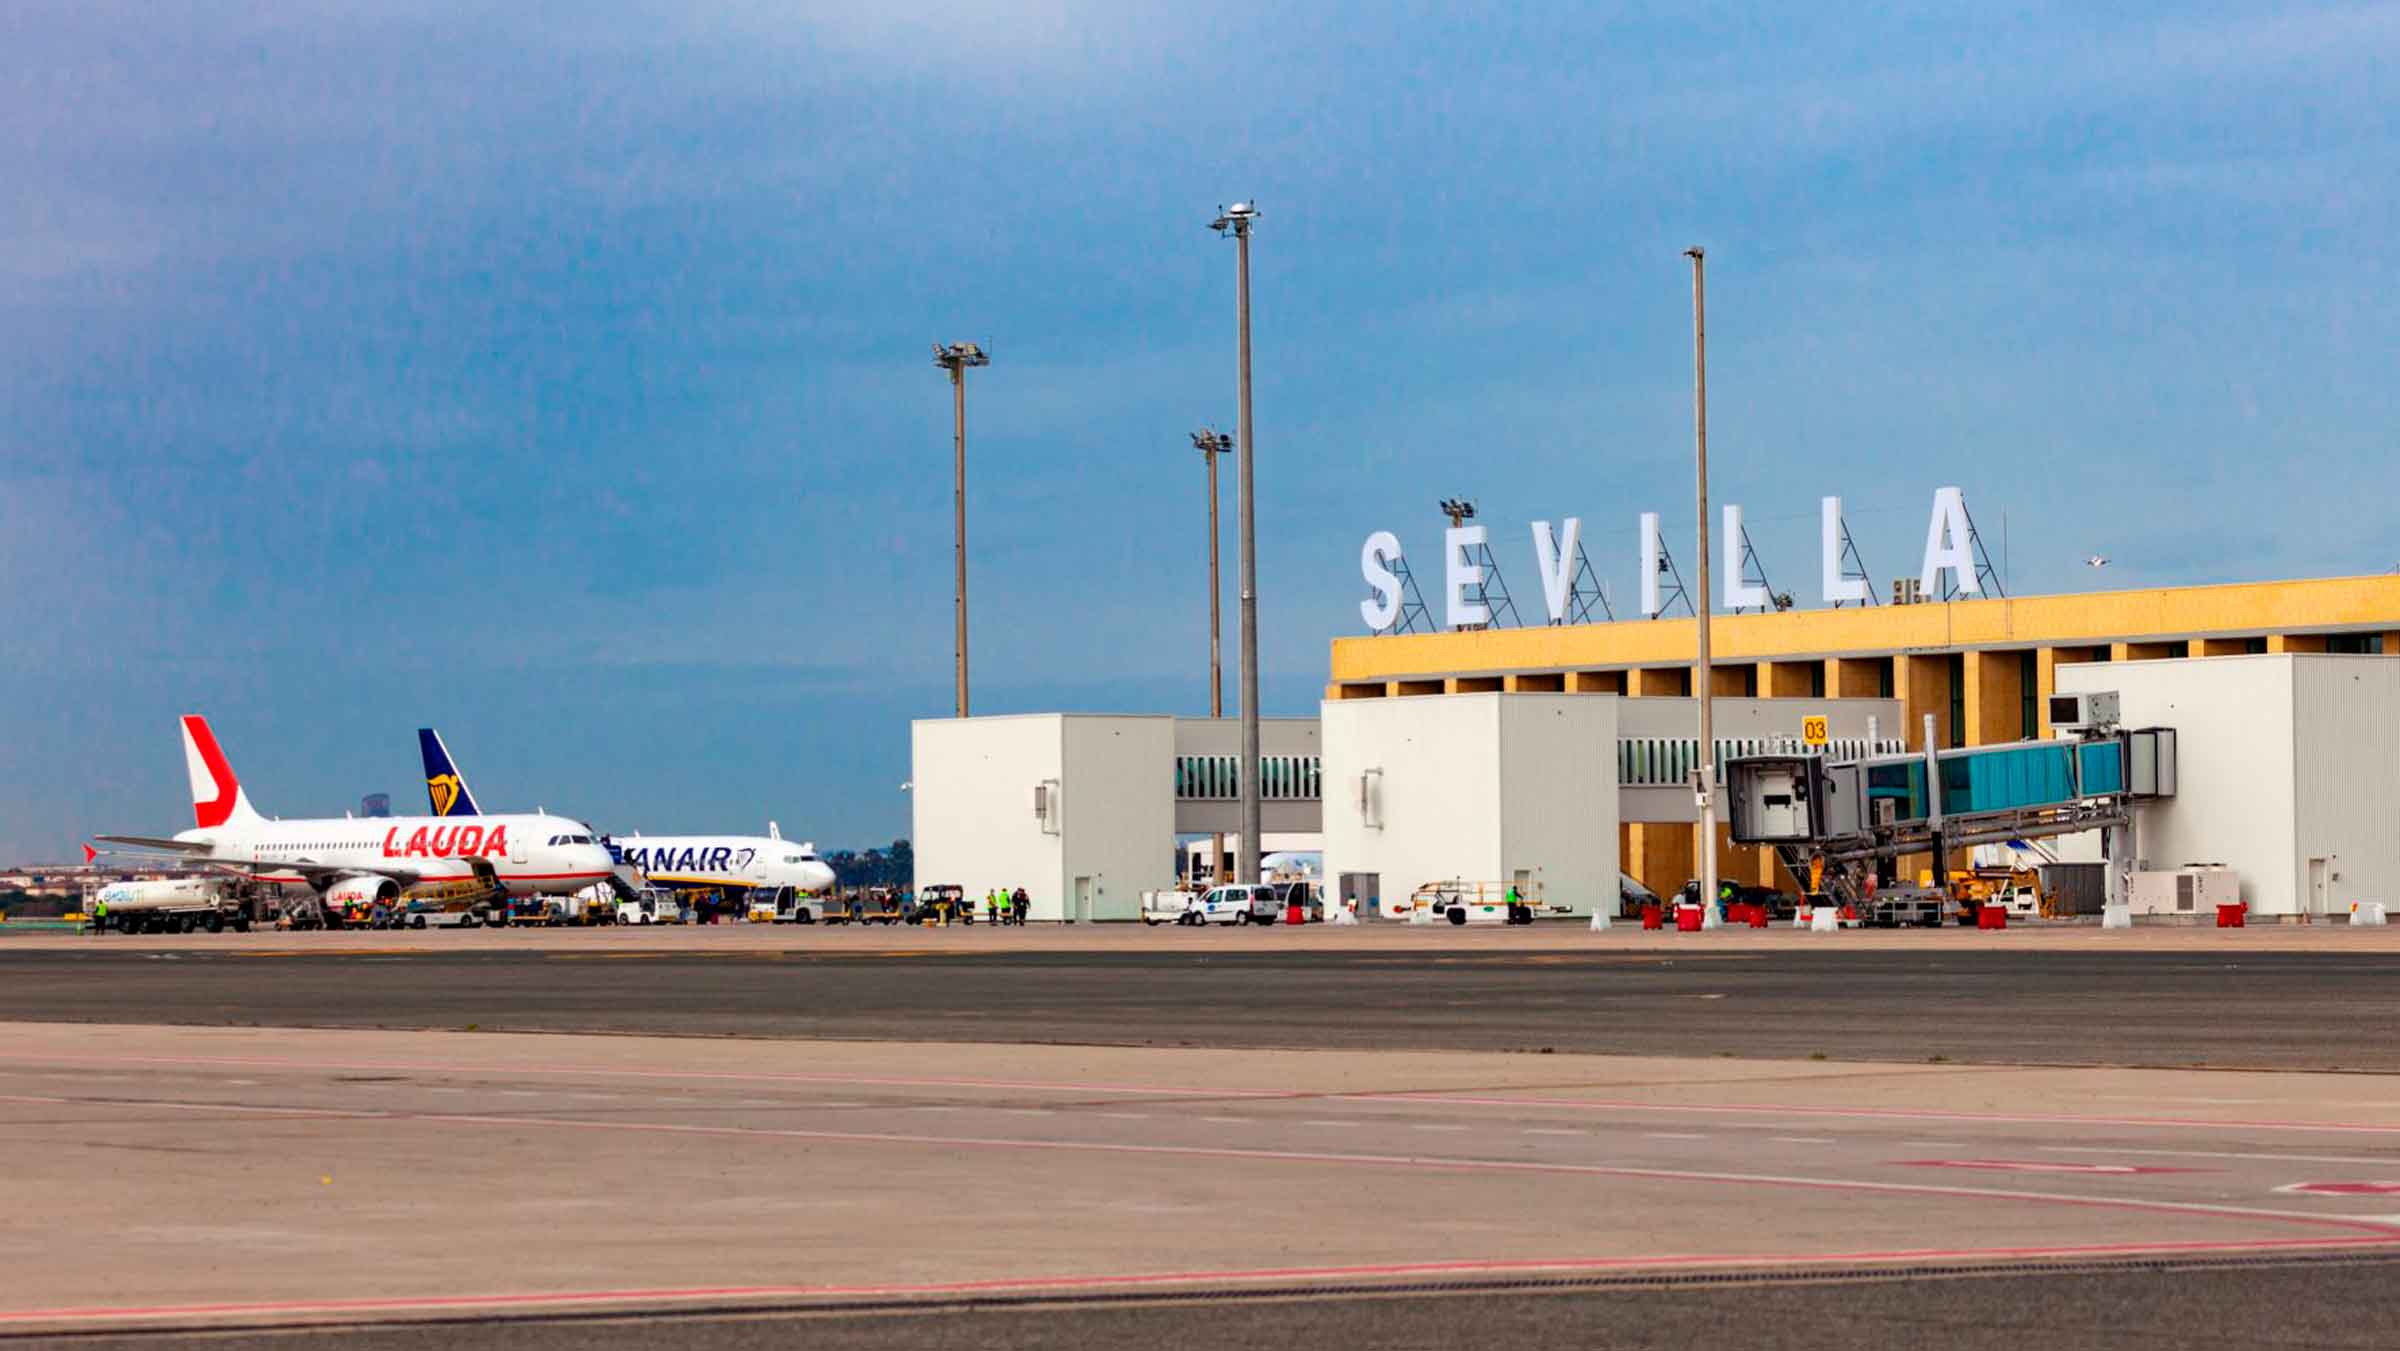 Aeroporto de Sevilha funciona